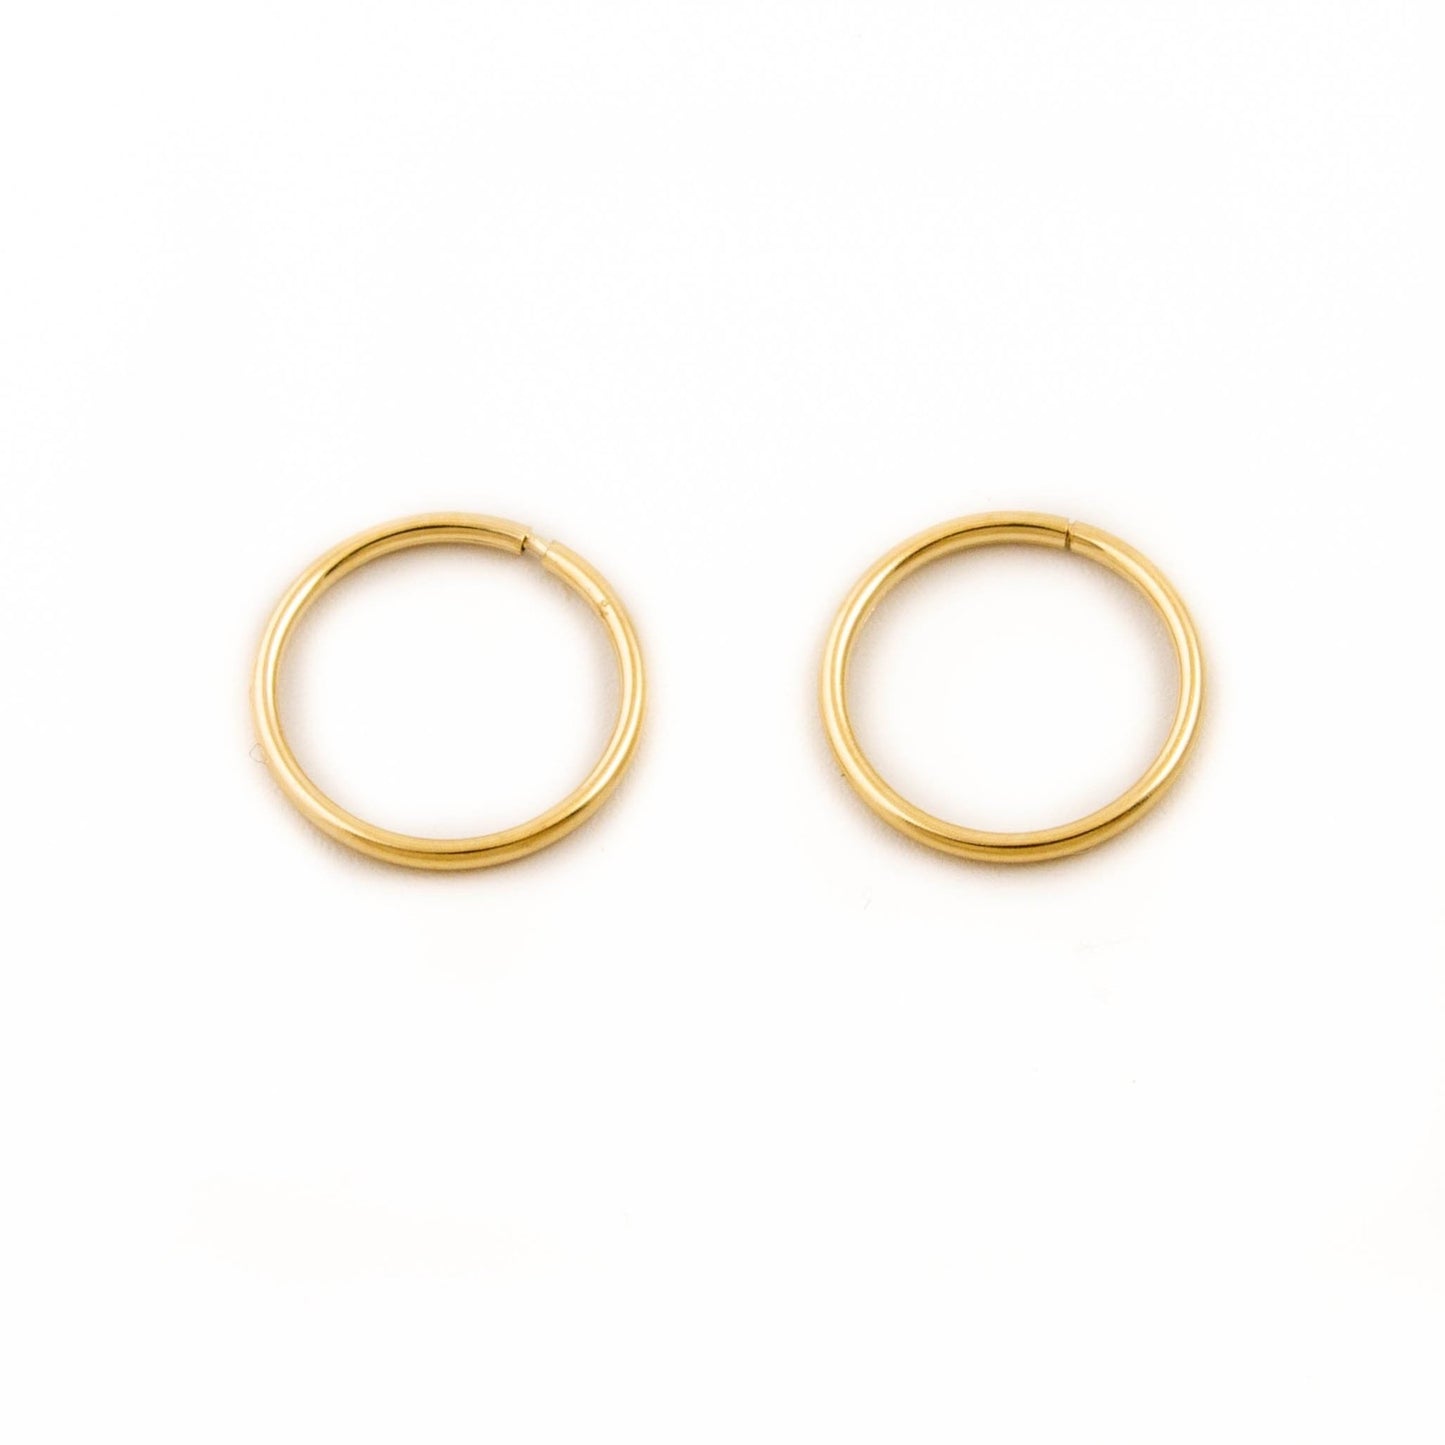 10kt Gold Seamless Hoops - Kingdom Jewelry